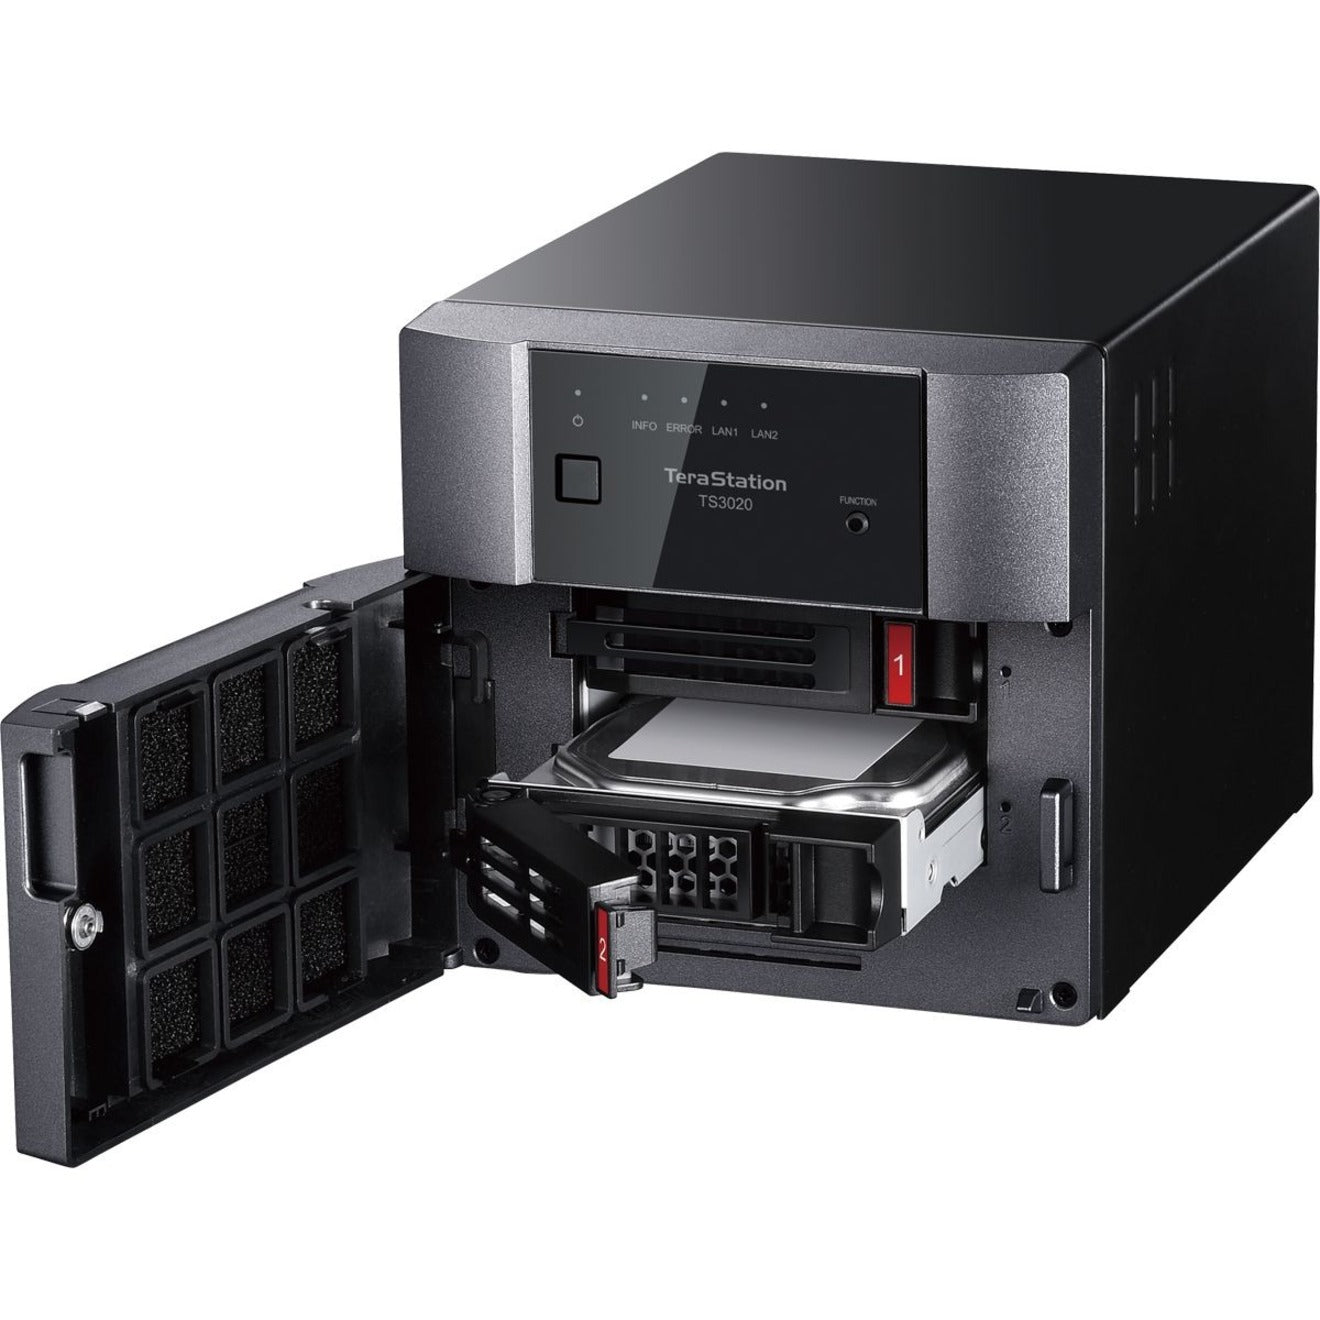 Buffalo TS3220DN0402 TeraStation 3220DN Desktop 4 TB NAS Hard Drives Included, Quad-core, 2.5 Gigabit Ethernet